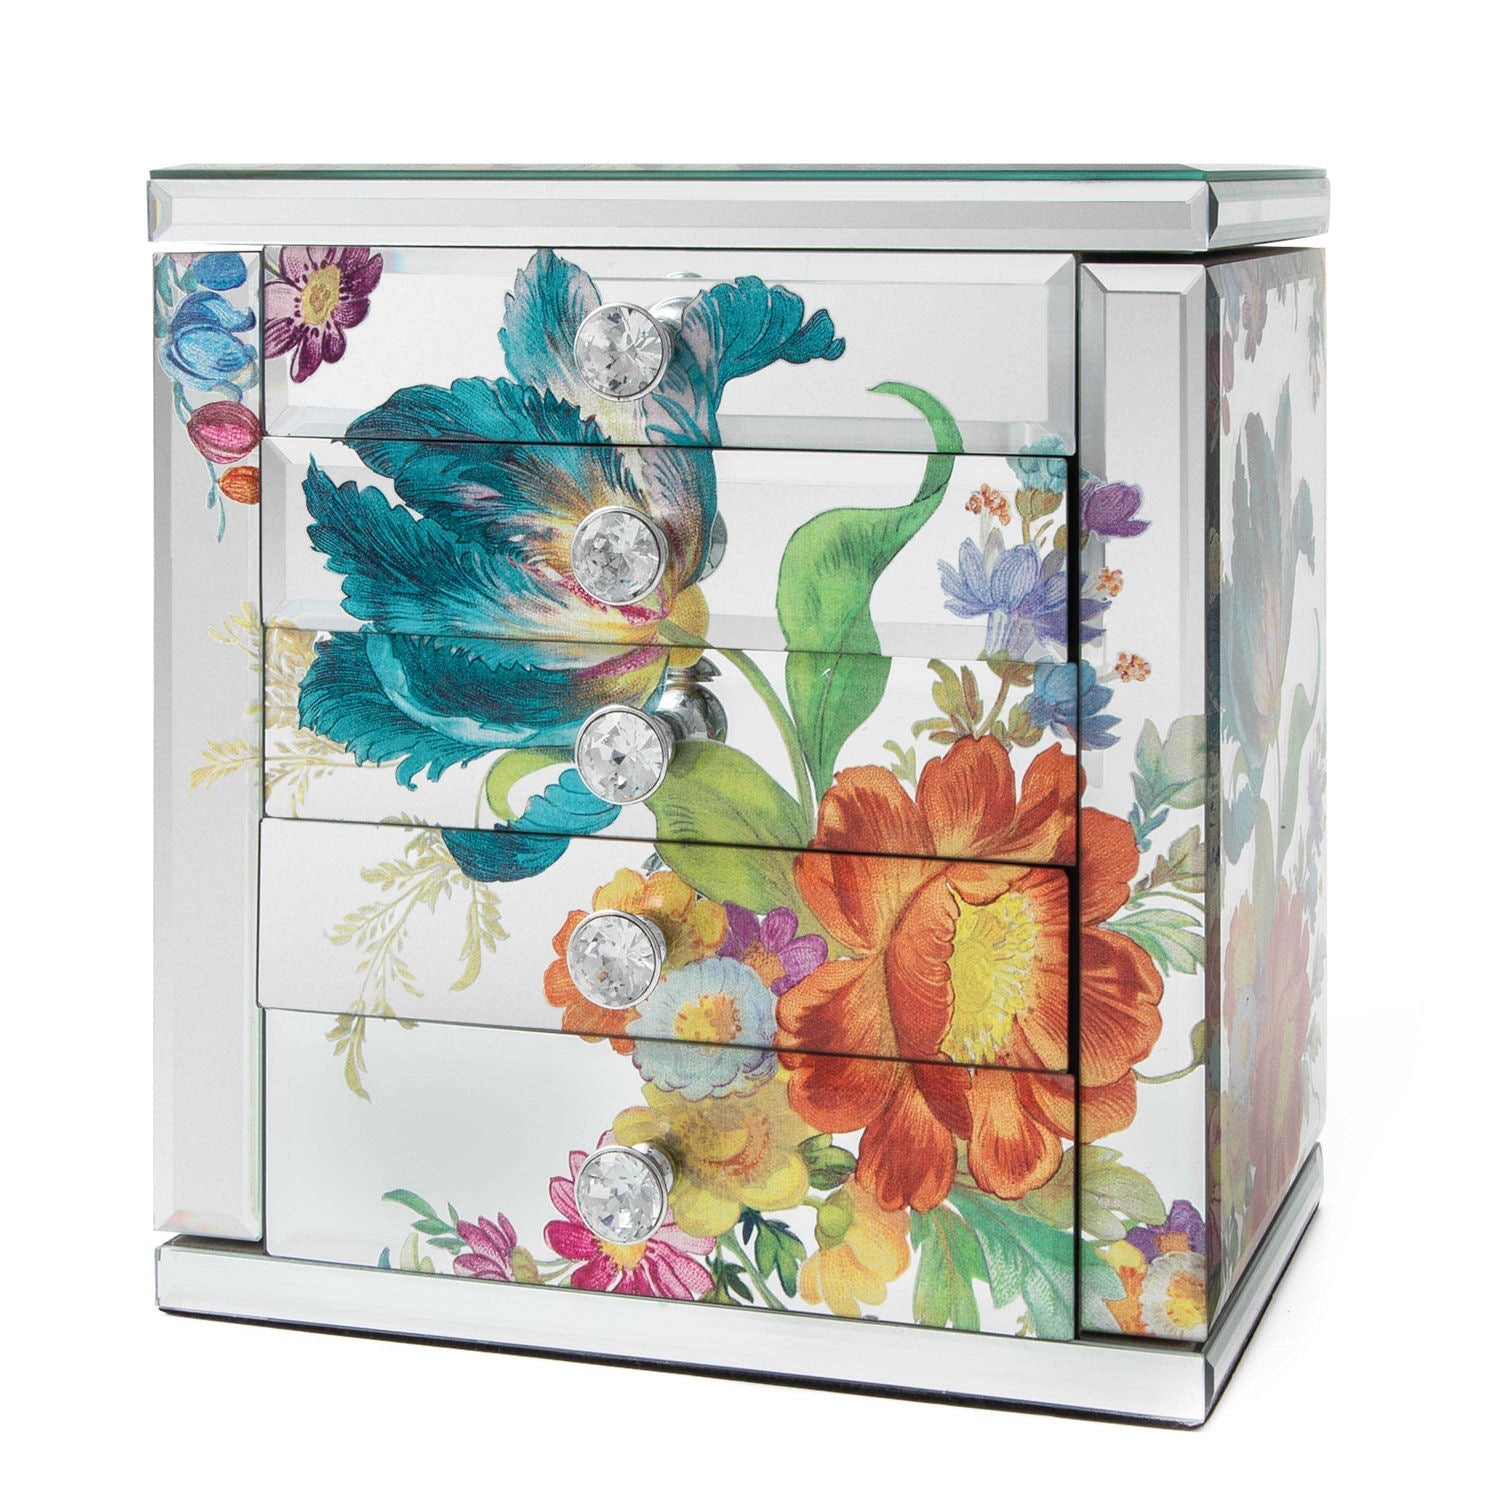 Flower Market Reflections Jewelry Armoire - |VESIMI Design|